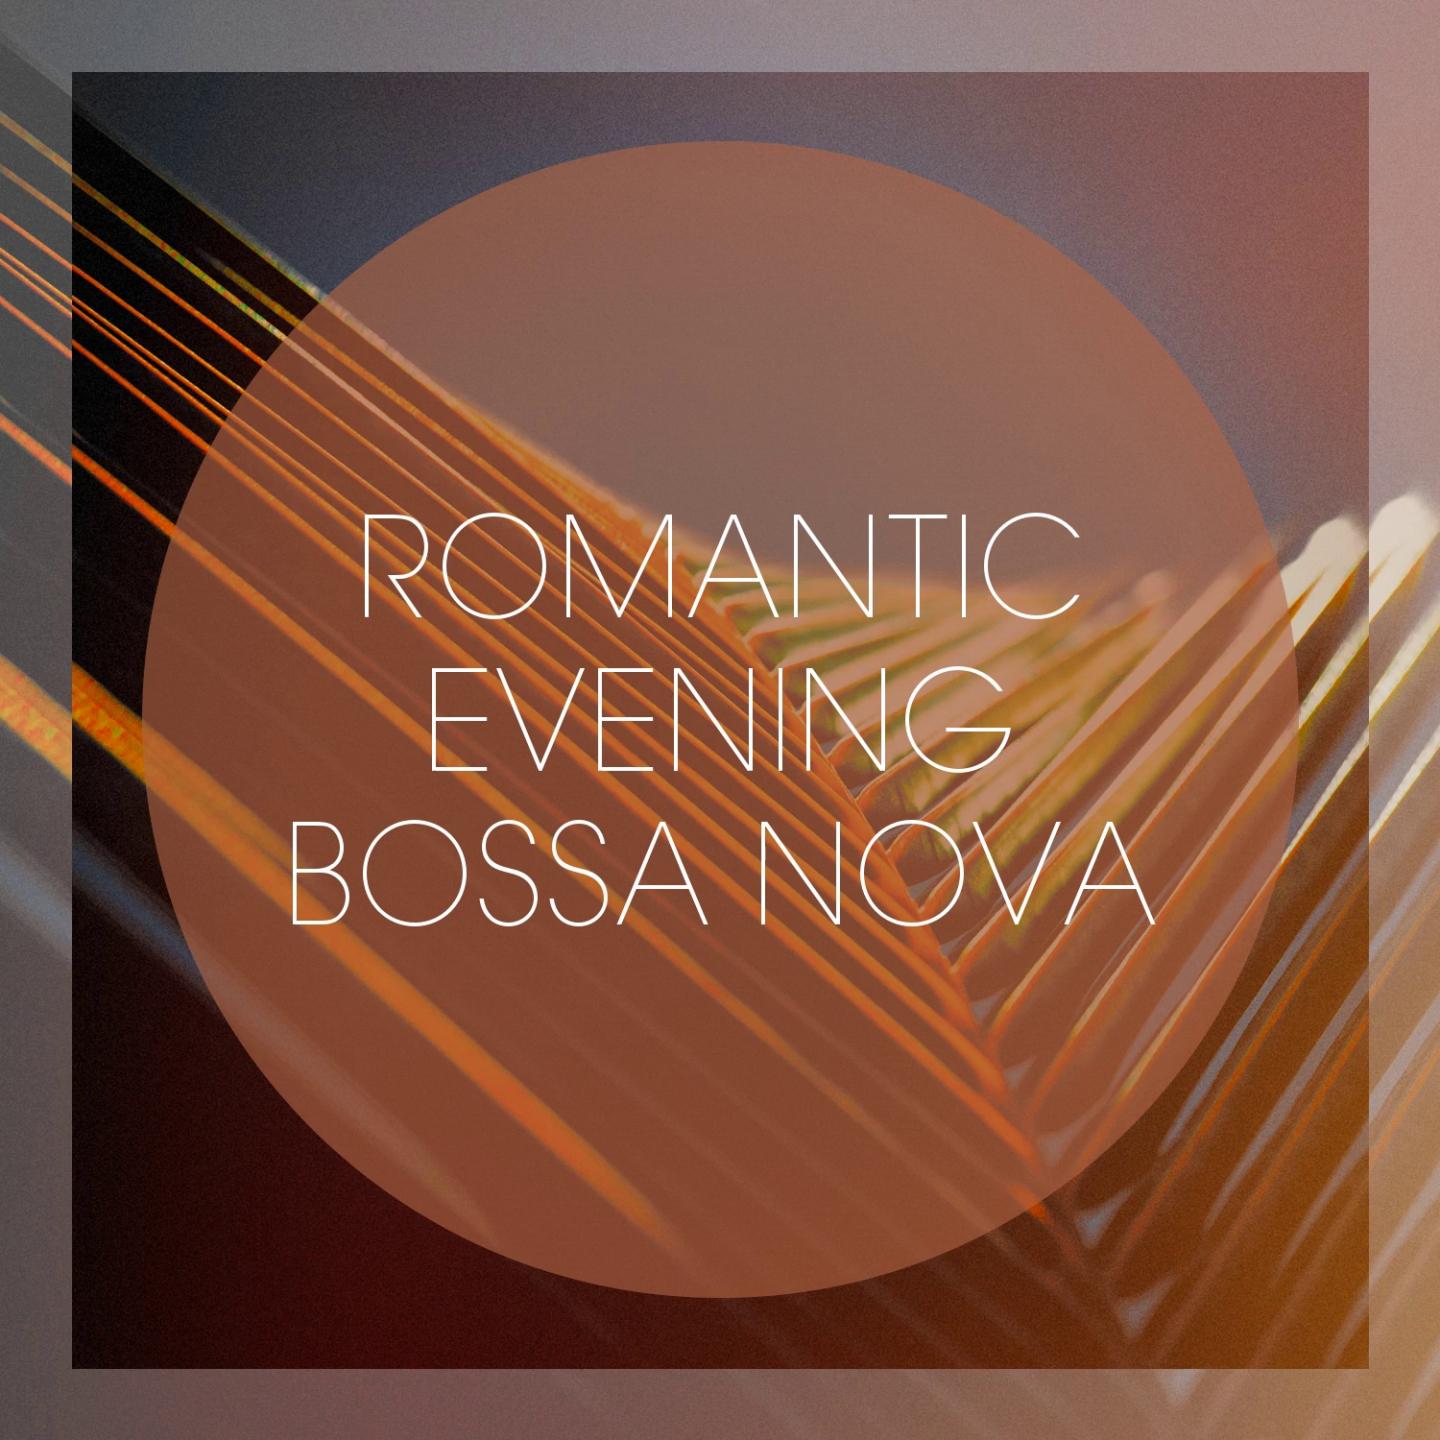 Romantic evening bossa nova